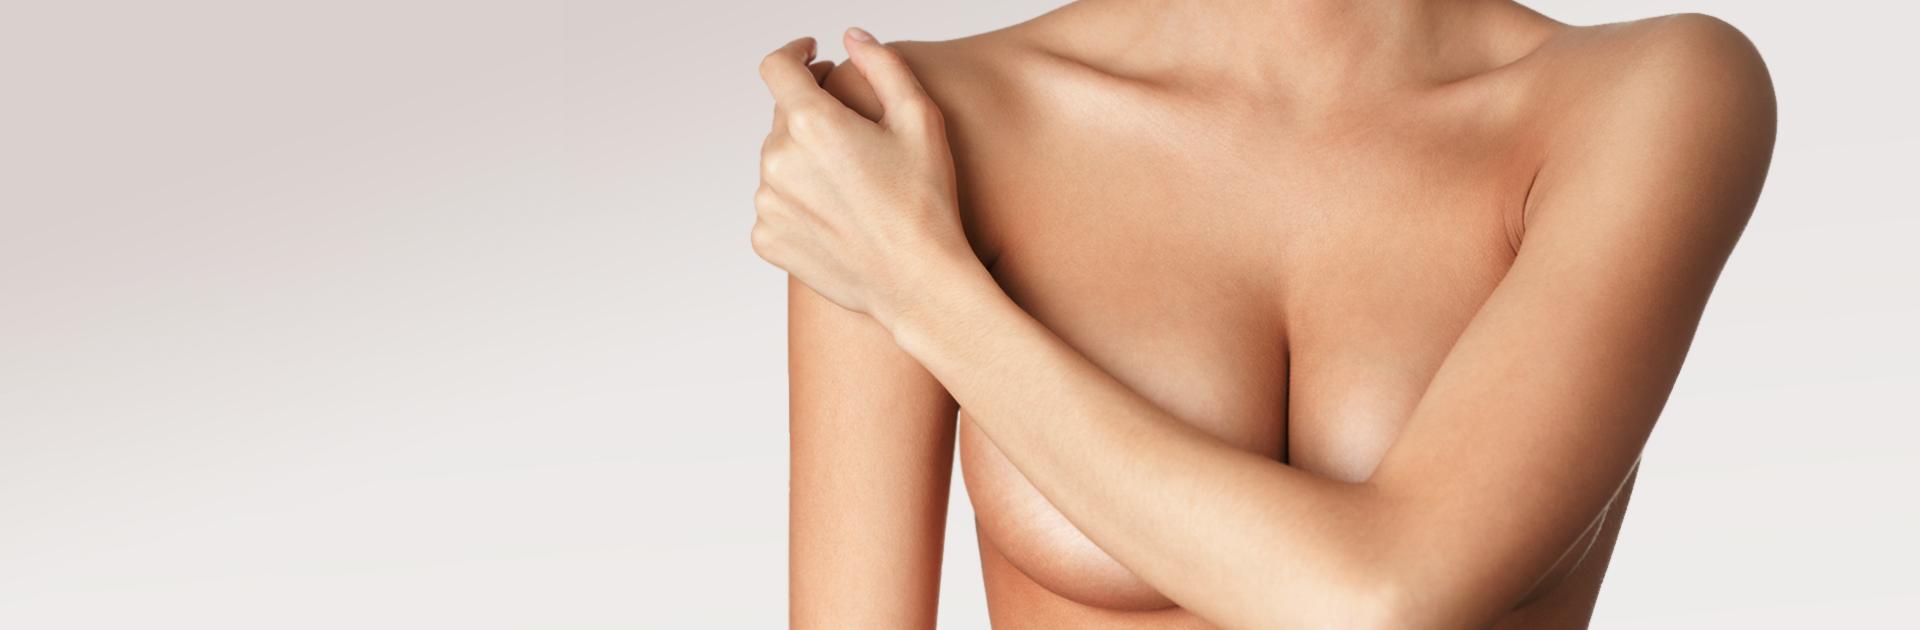 Моделирование груди - маммопластика